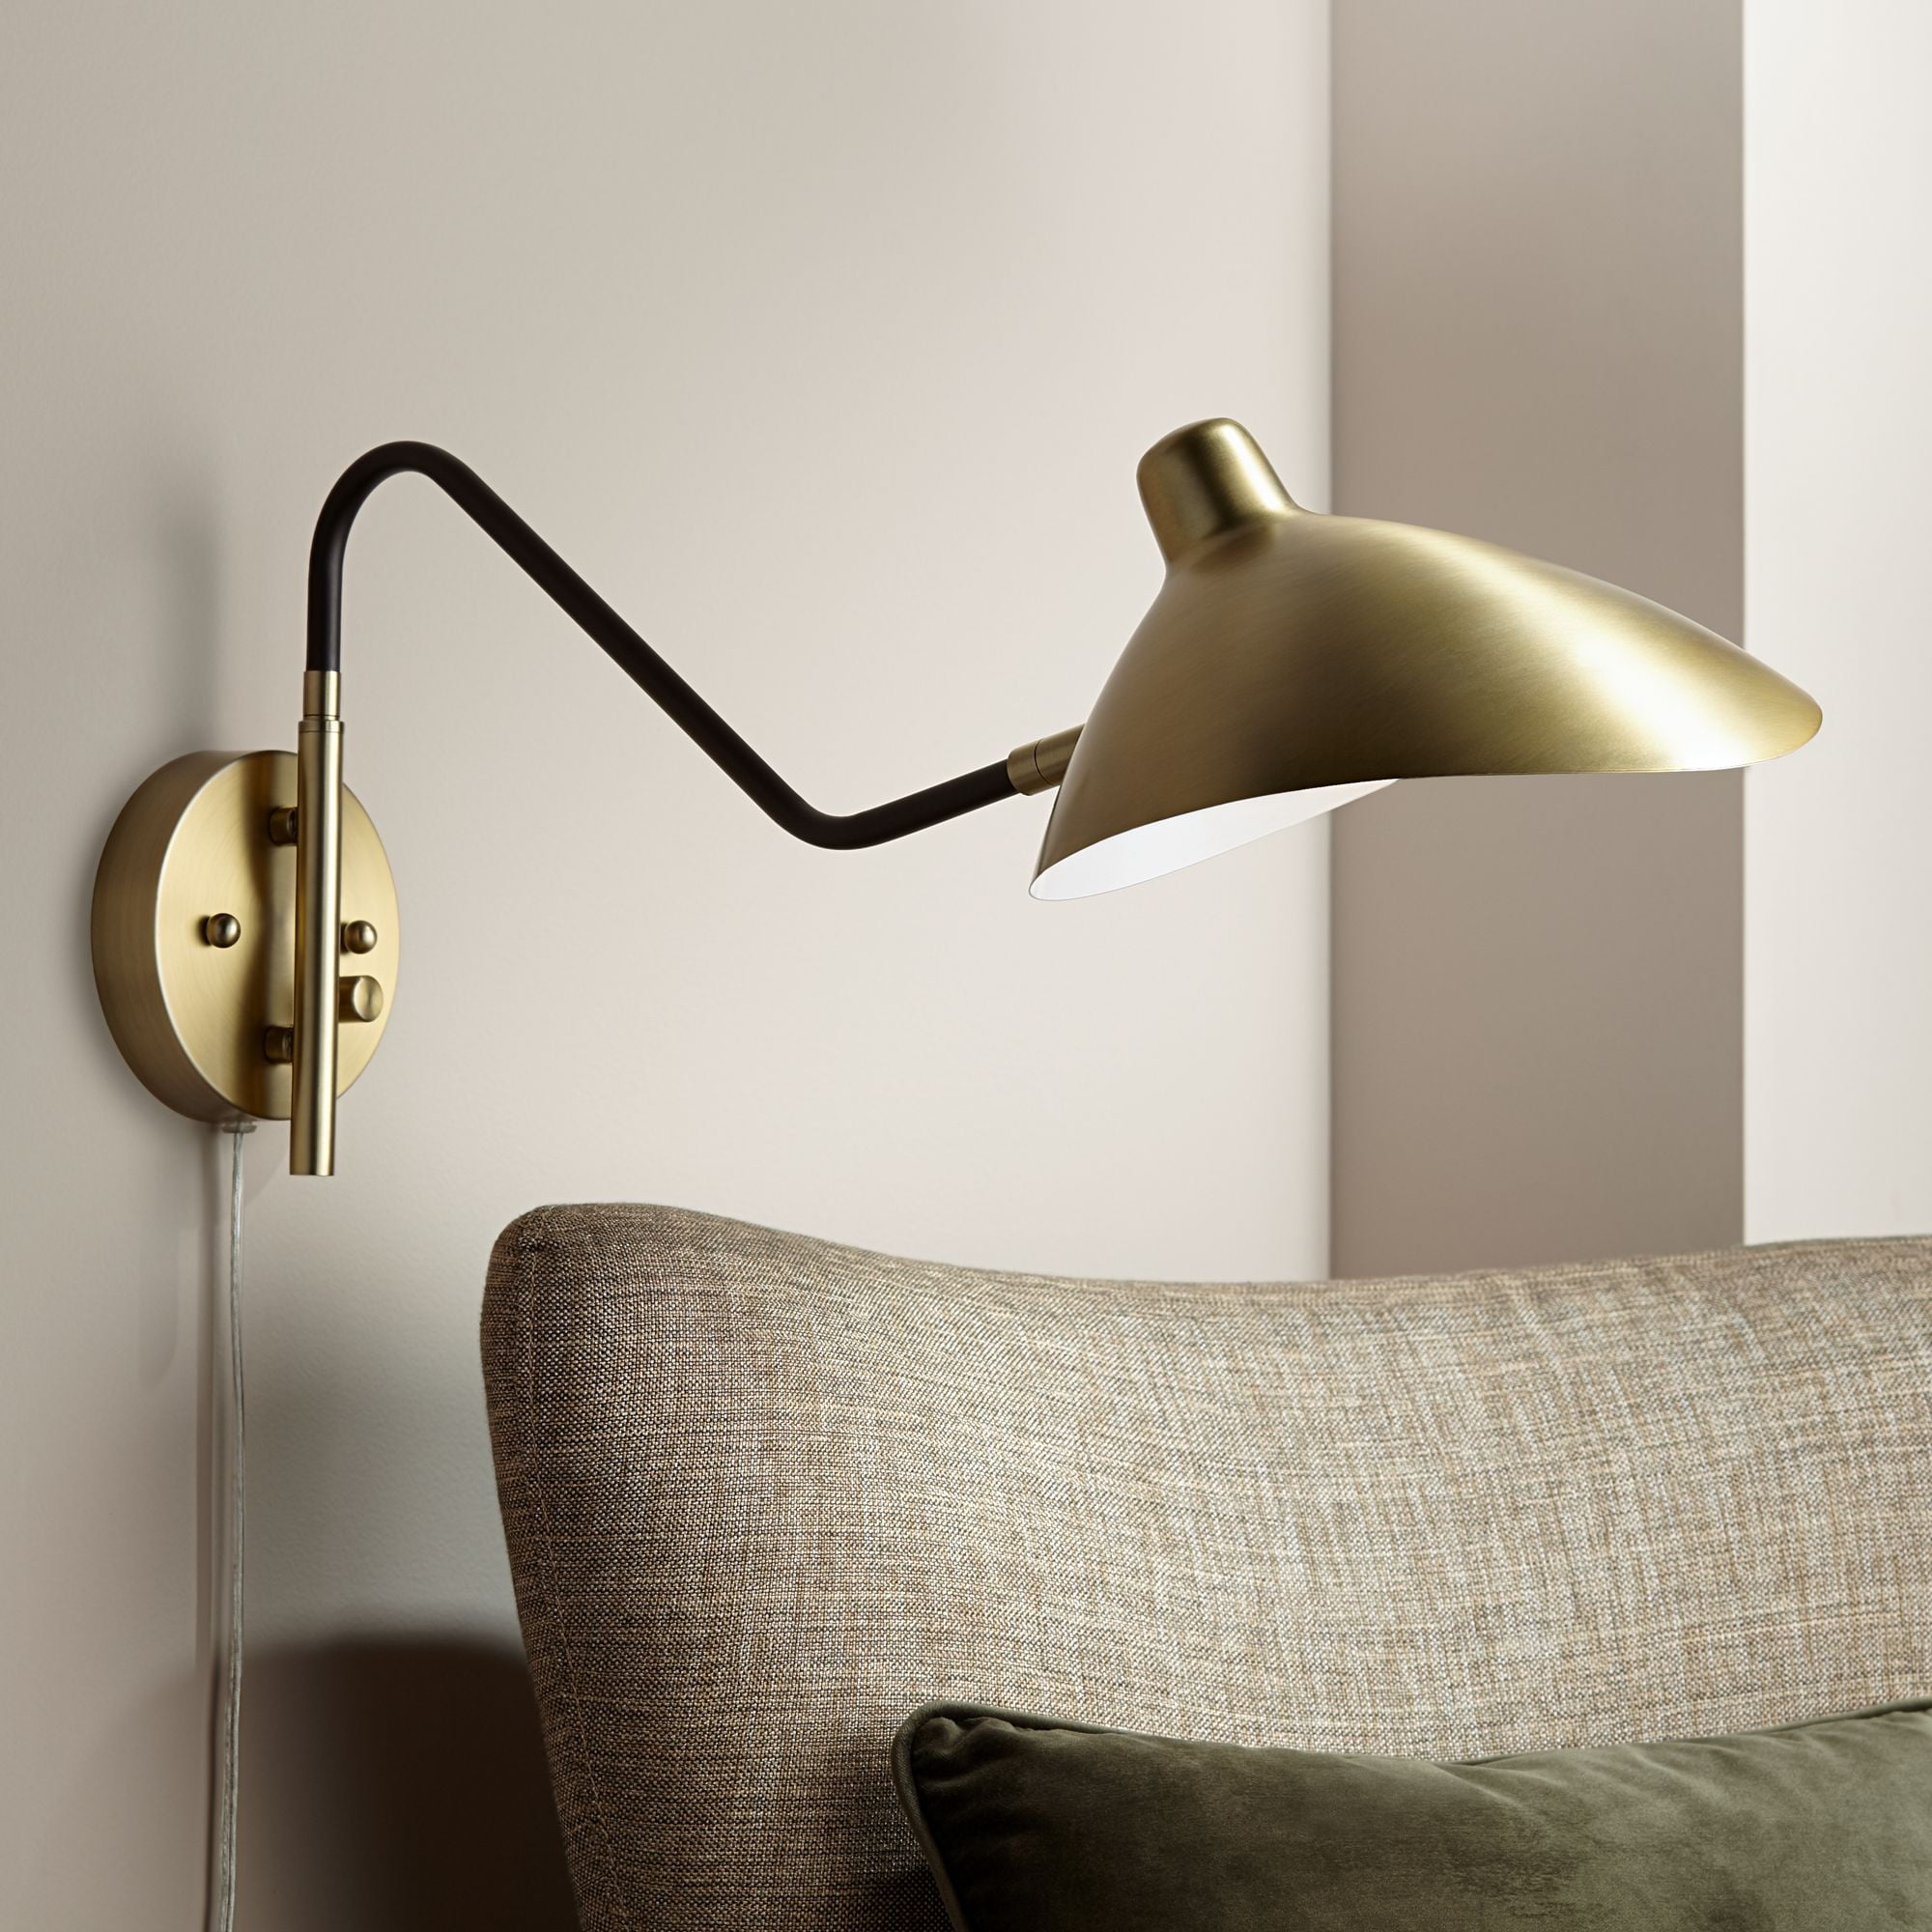 Details about   Retro Modern Swing Arm Vanity Lighting Adjustable Wall Lamp Metal Wall Lights